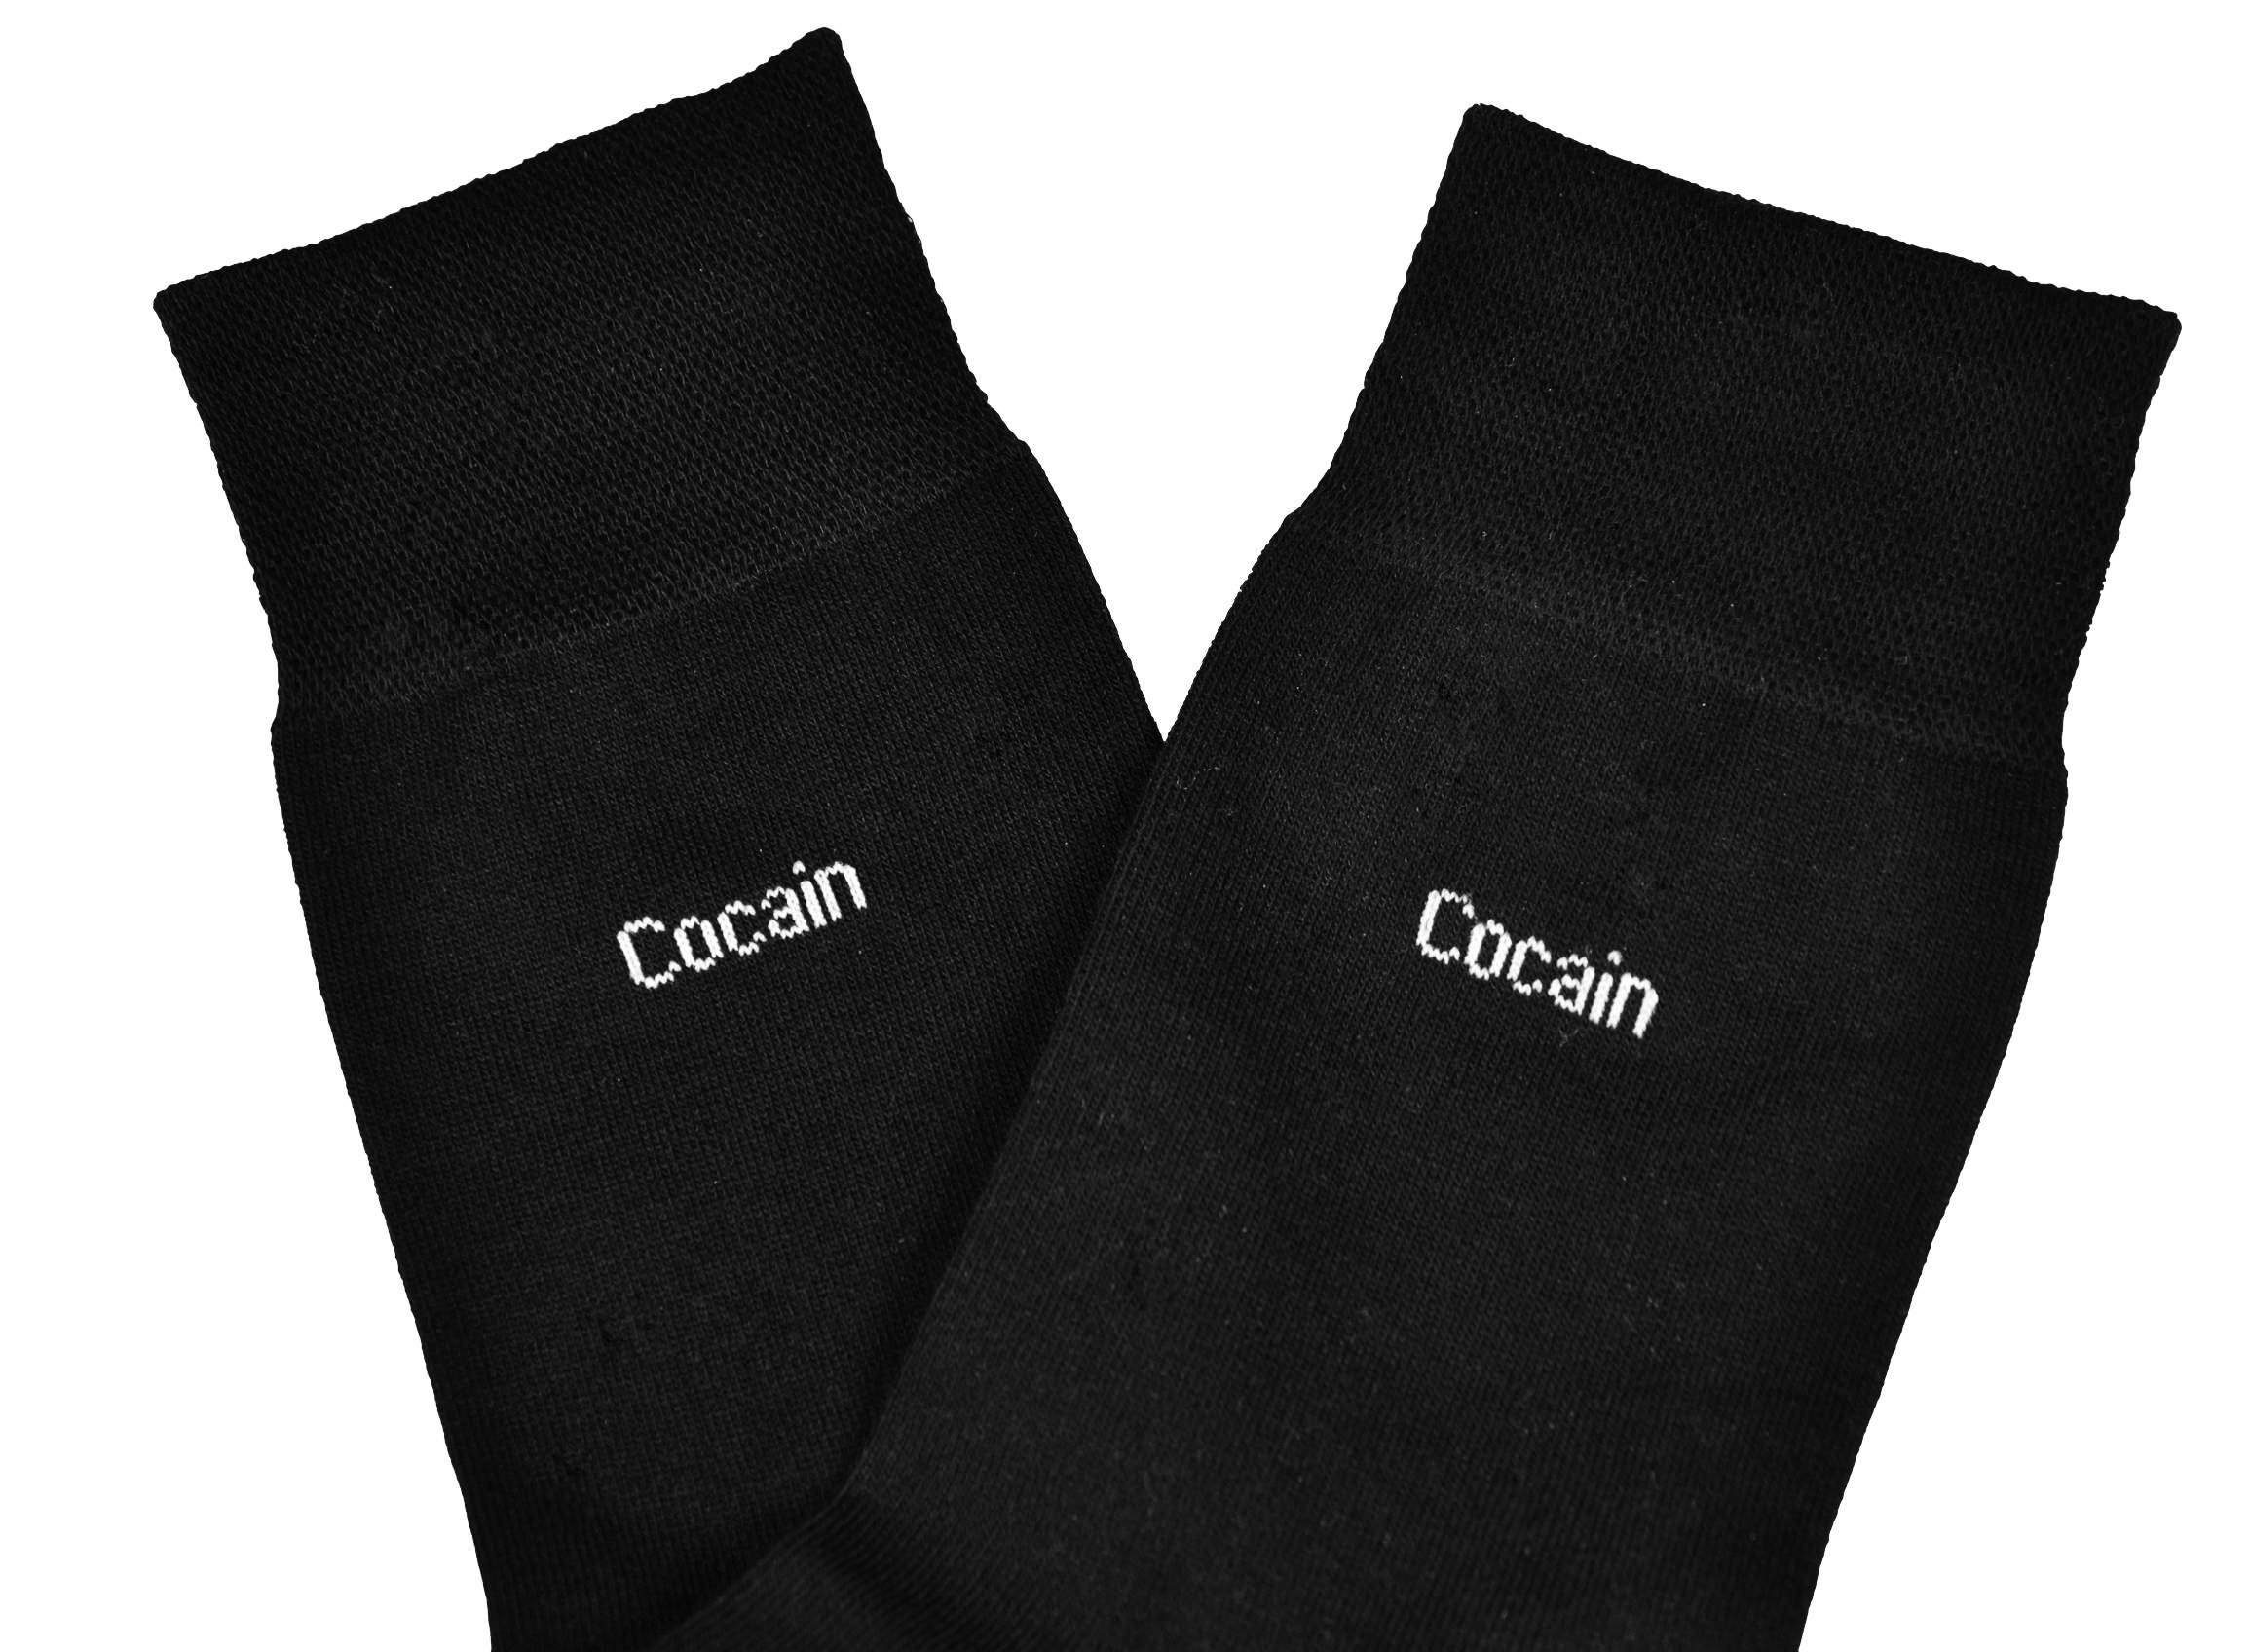 (9-Paar) schwarz Herren Socken Paar 200 9 in Damen Cocain Businesssocken & handgekettelt underwear Nadelqualität